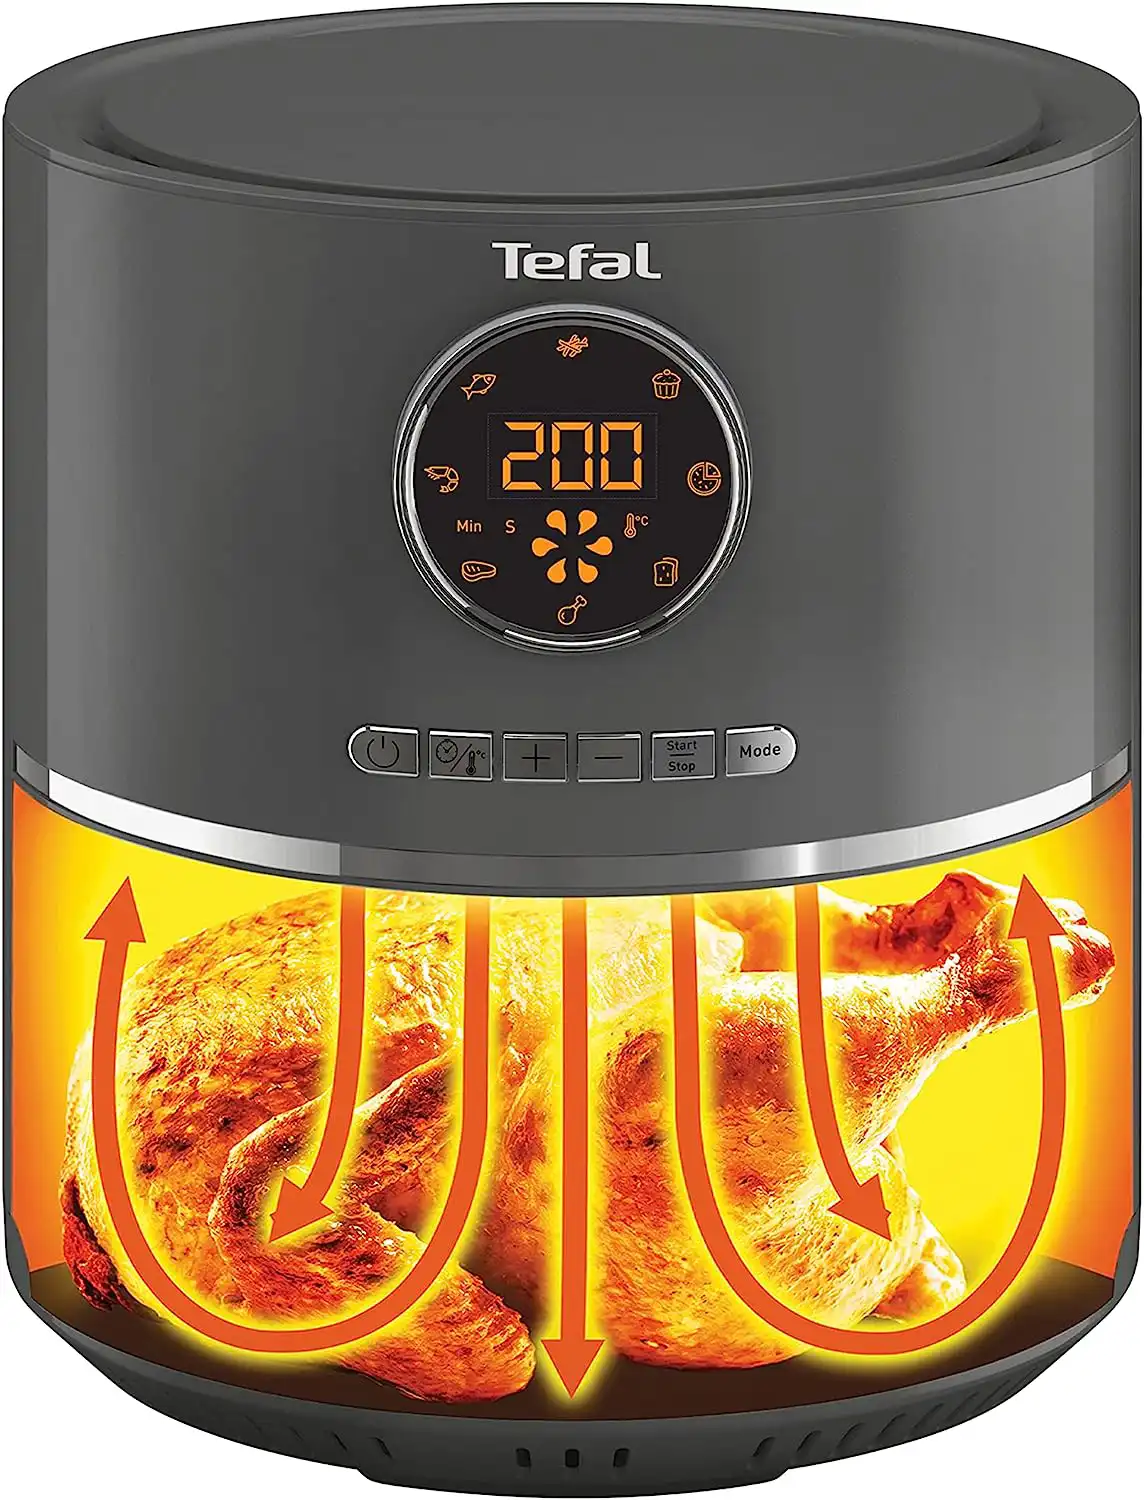 Tefal air fryer without oil, 1400 watts, 4.2 liters, digital display, grey, EY111B15, (with Al-Tariq warranty)